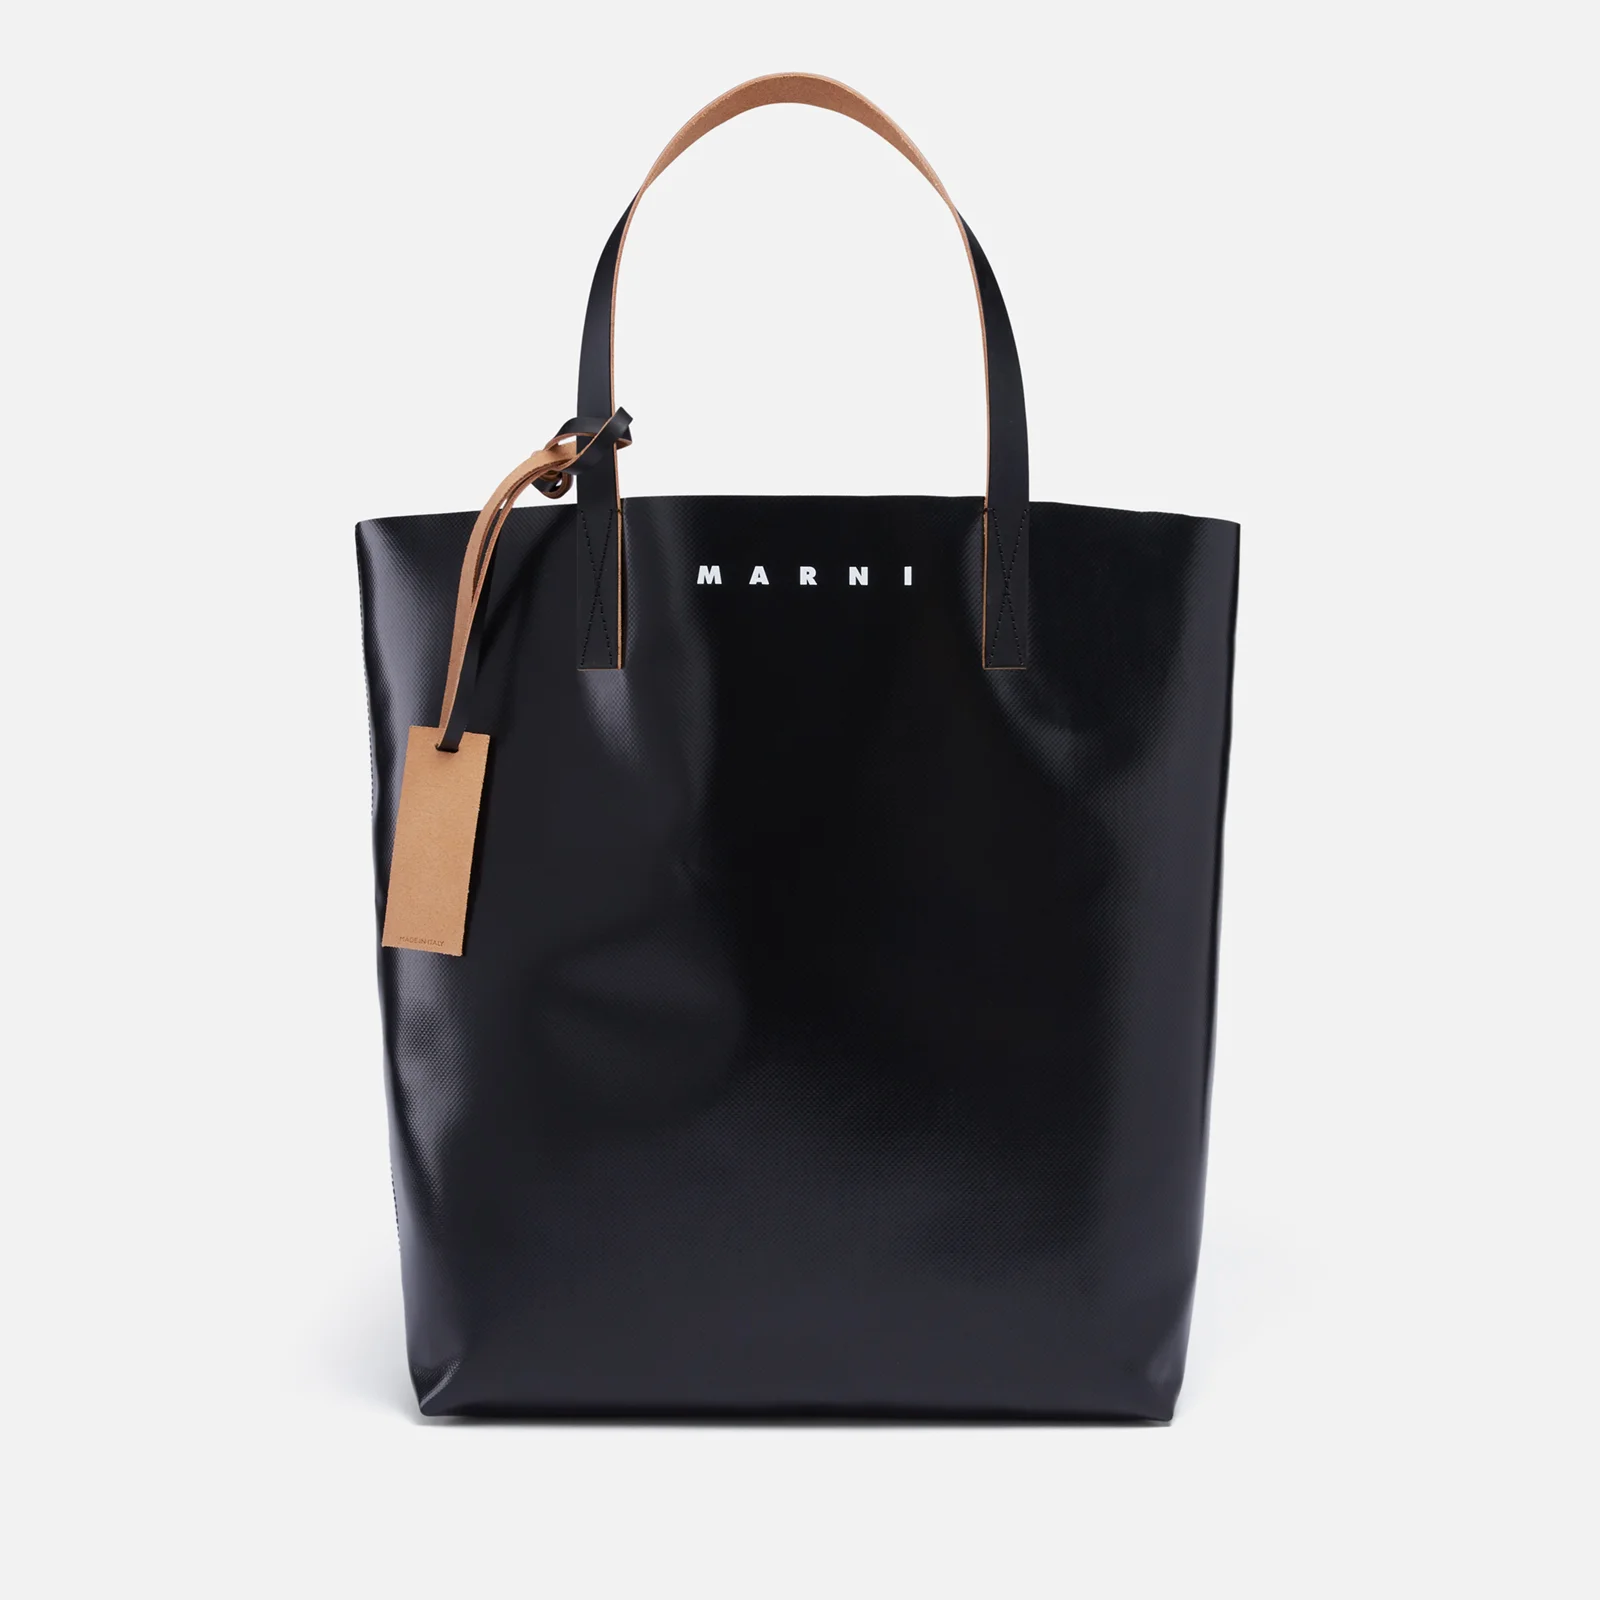 Marni Men's Shopping Bag - Black/Royal Image 1